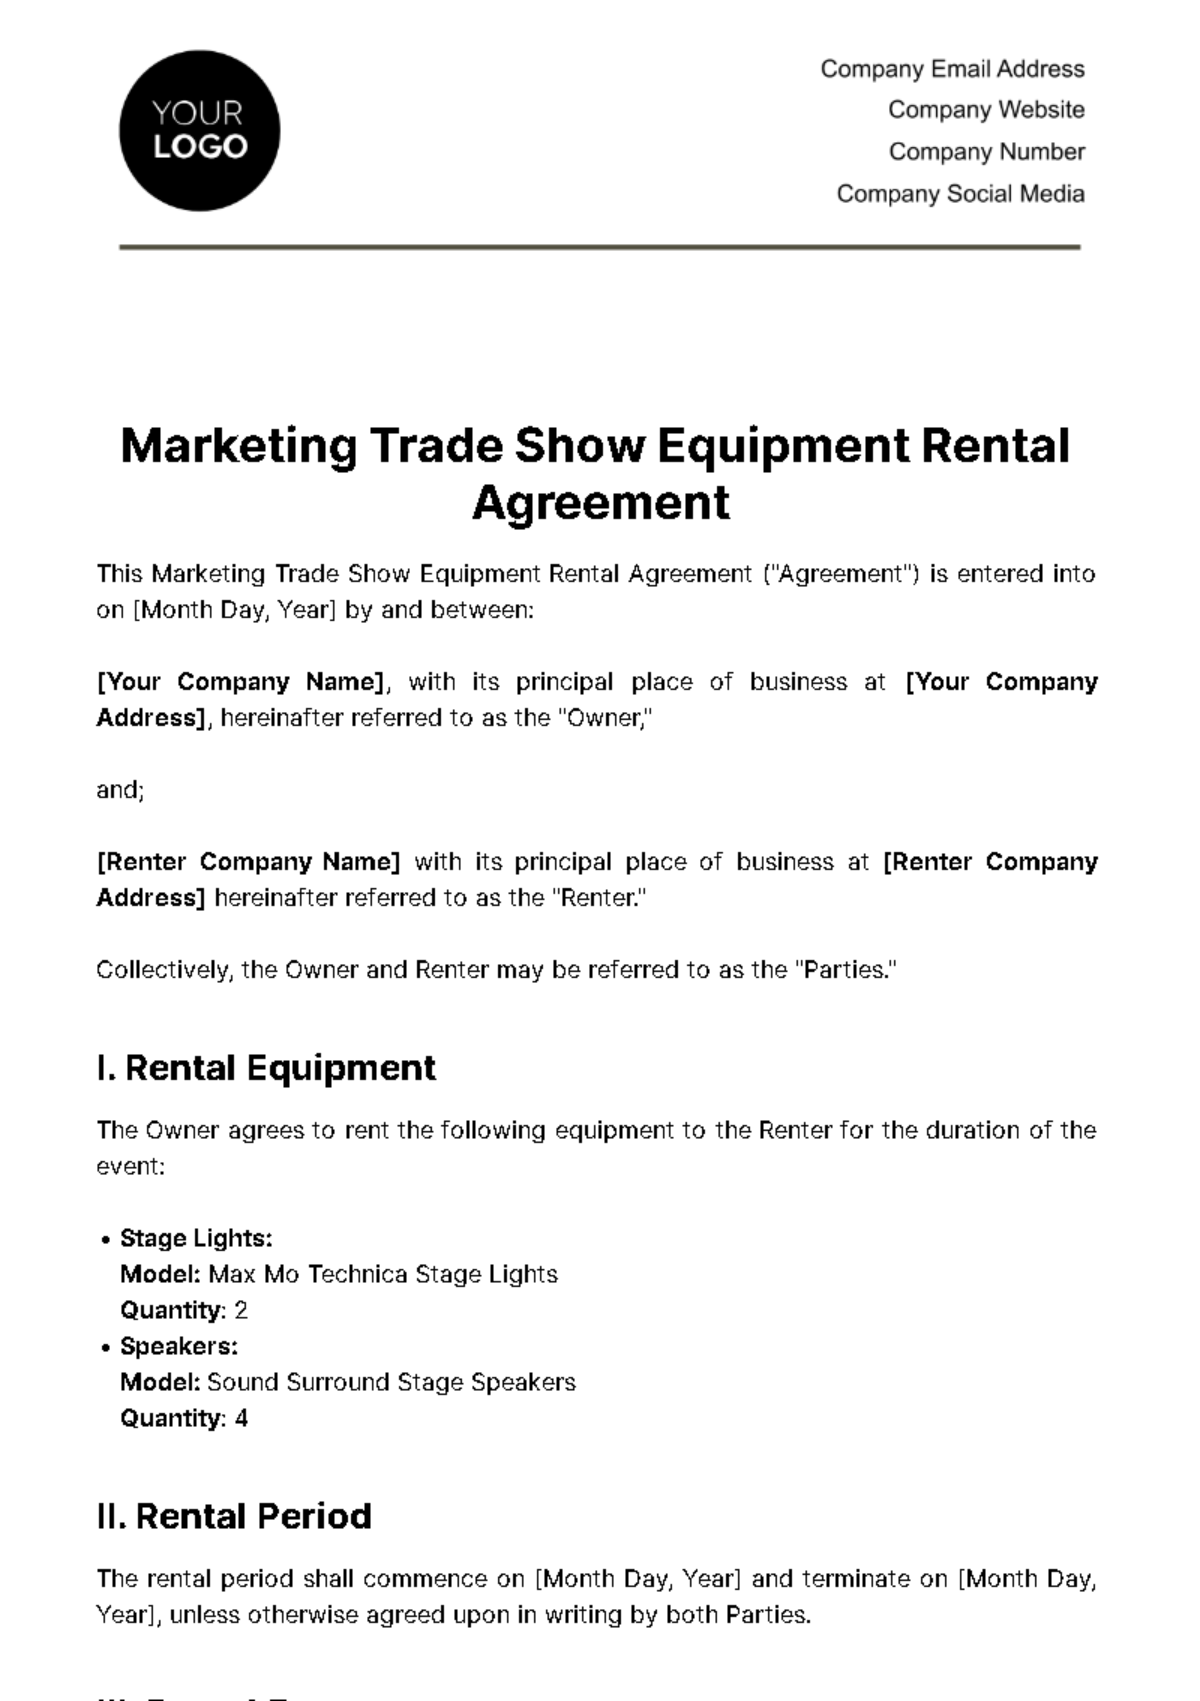 Free Marketing Trade Show Equipment Rental Agreement Template